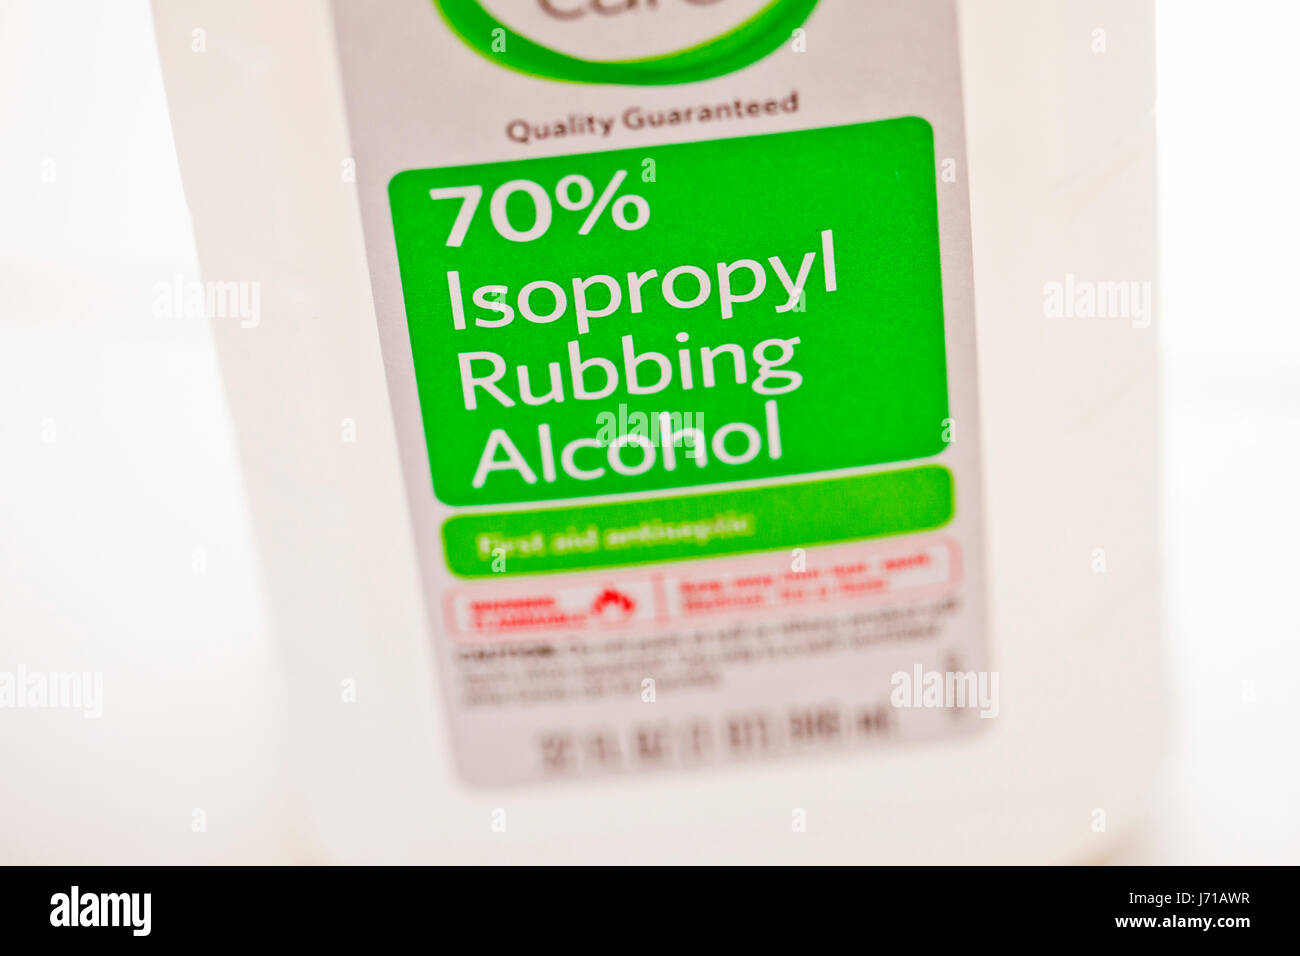 70% isopropyl rubbing alcohol bottle - USA Stock Photo